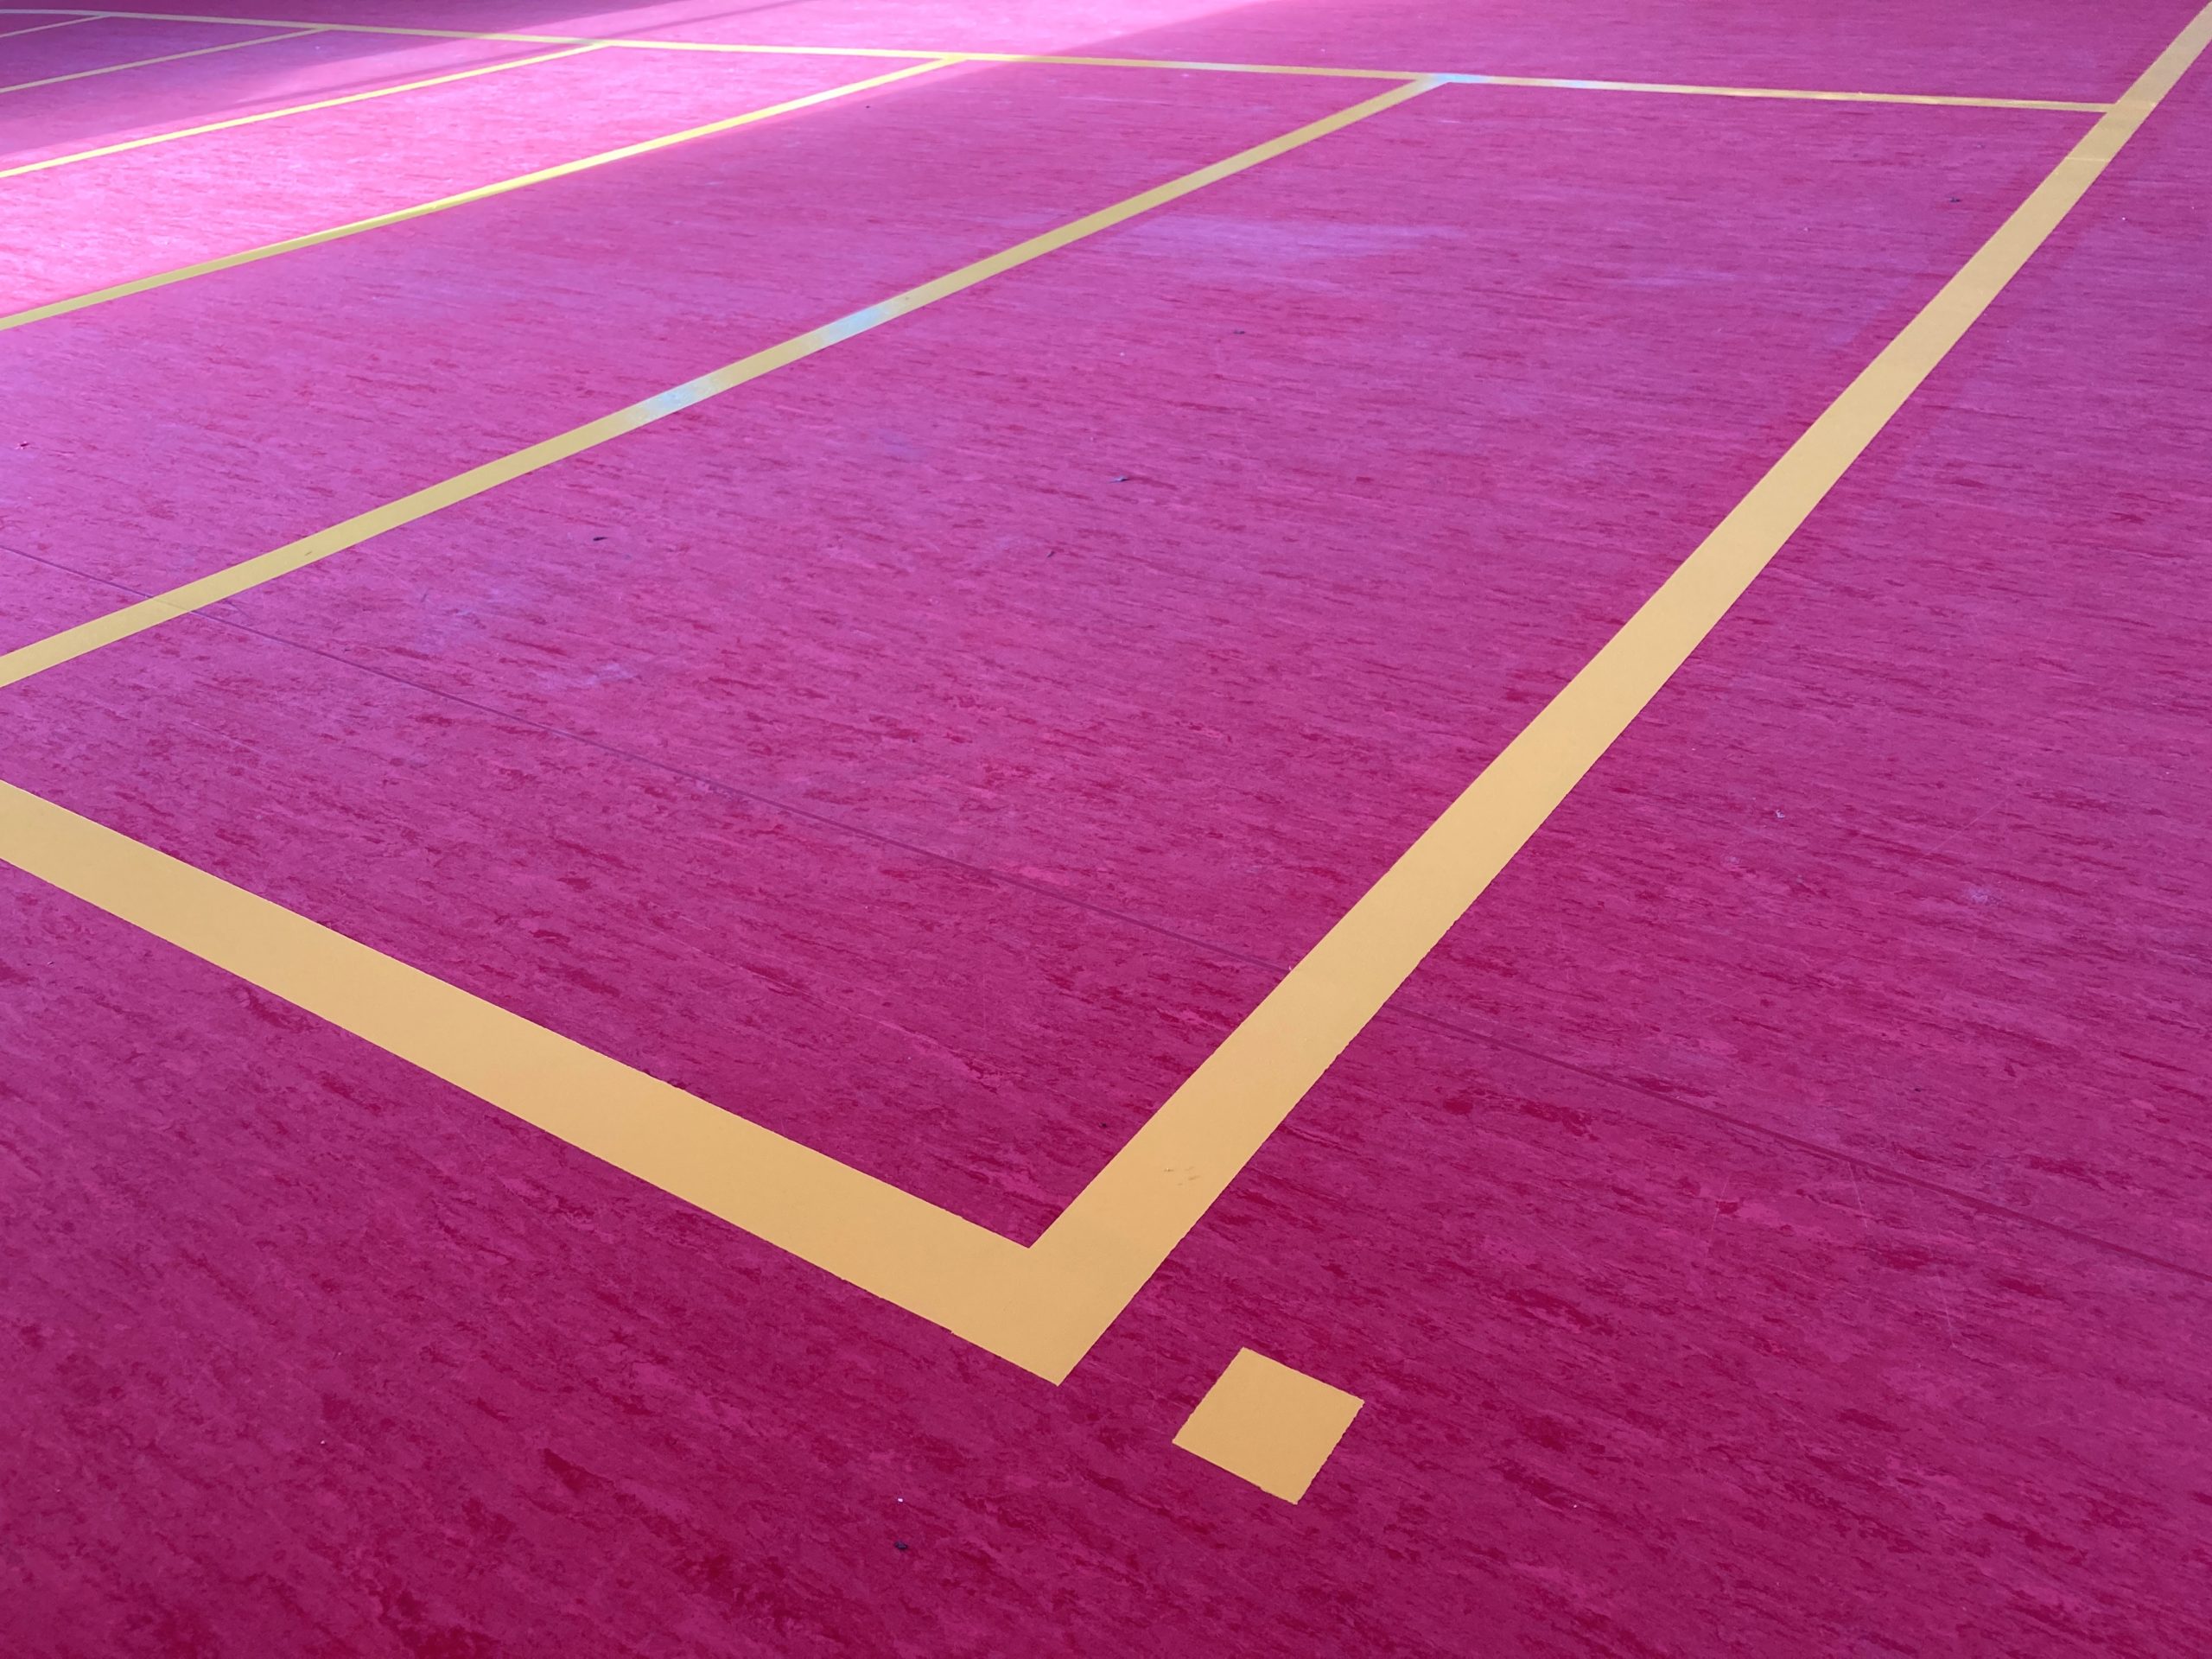 Sports hall flooring